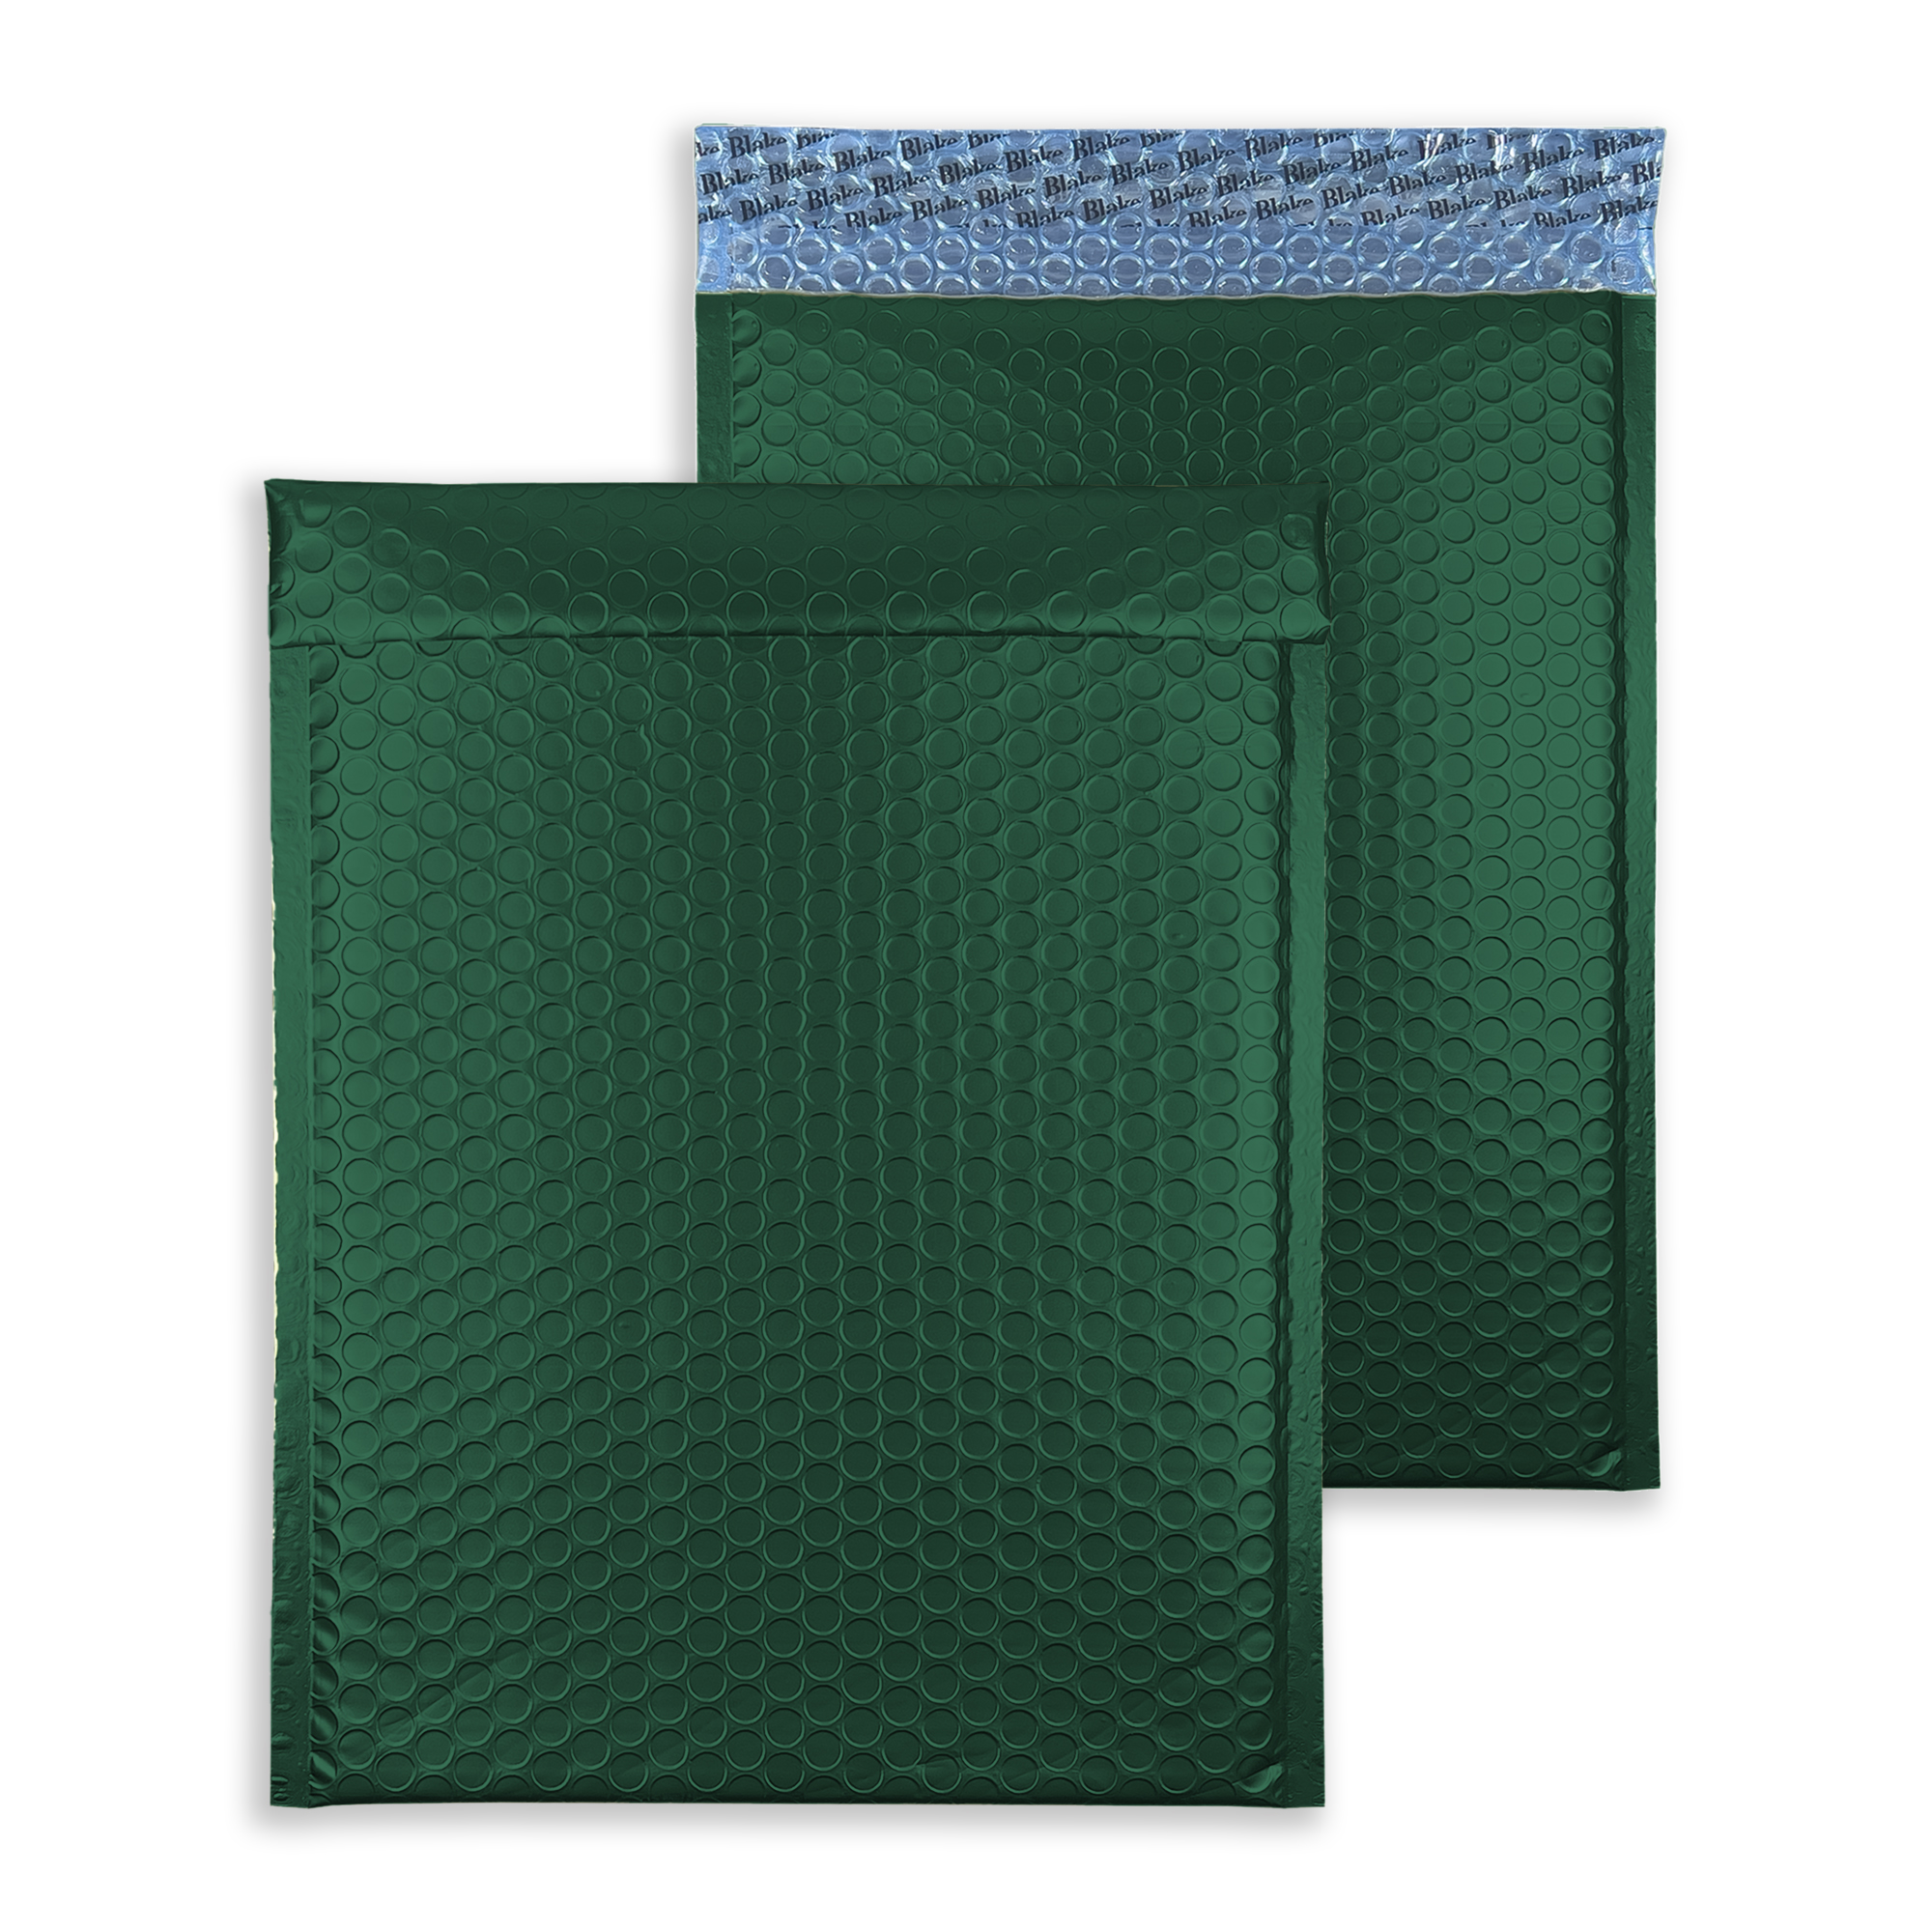 british-racing-green-bubble-padded-envelopes-matt-rectangle-together